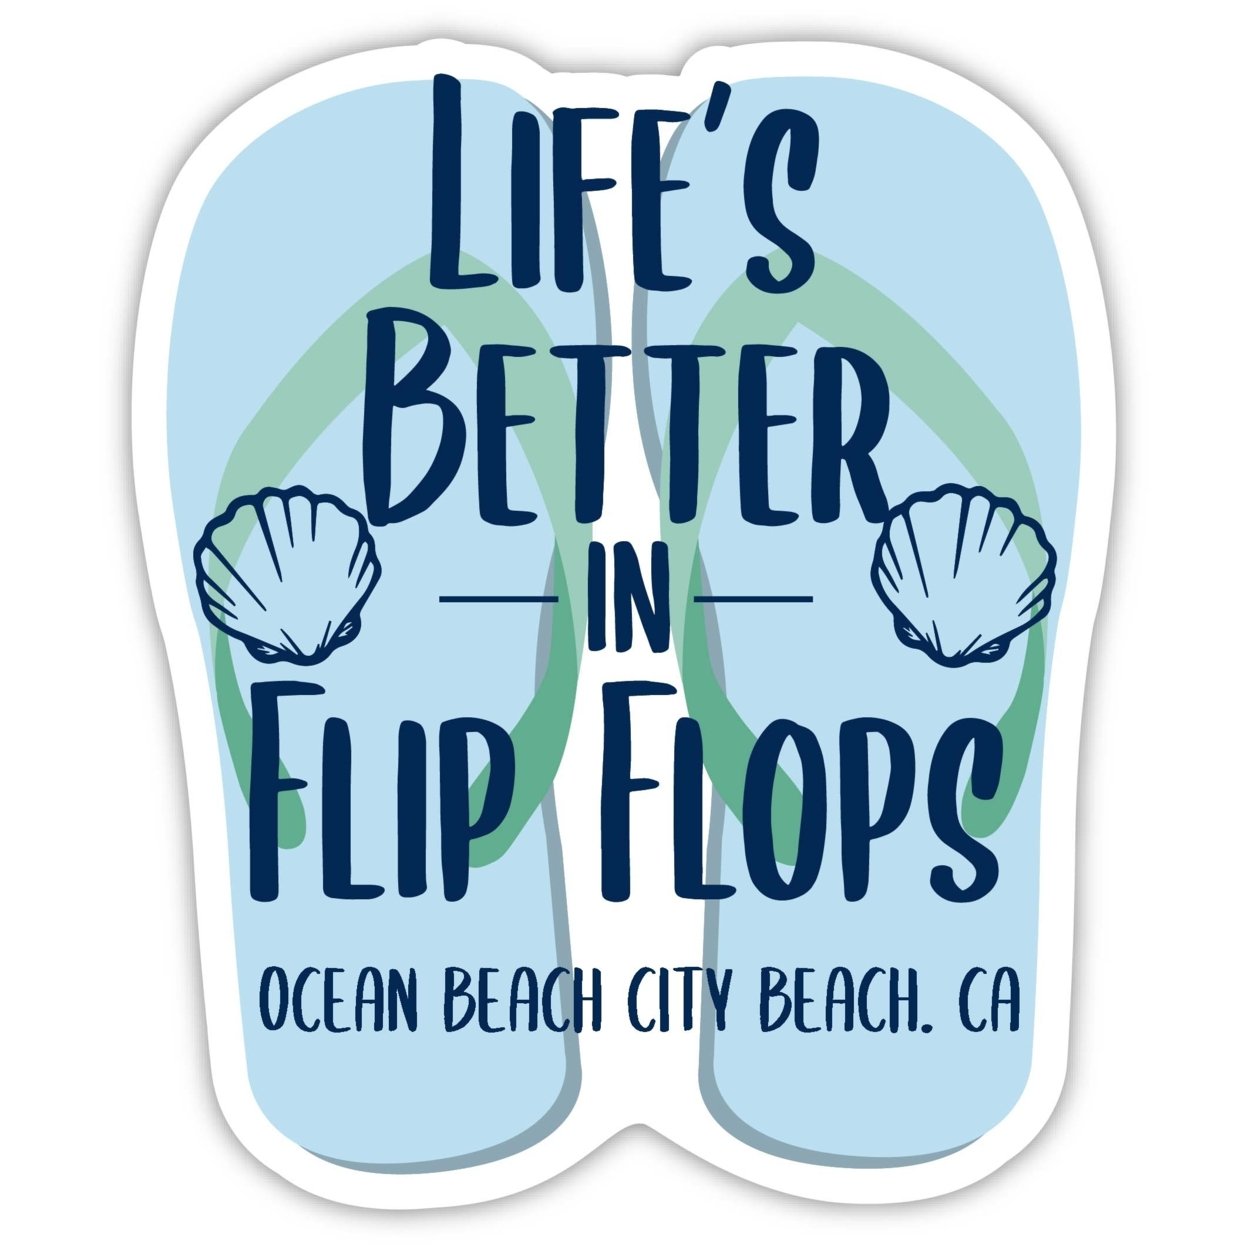 Ocean Beach City Beach California Souvenir 4 Inch Vinyl Decal Sticker Flip Flop Design